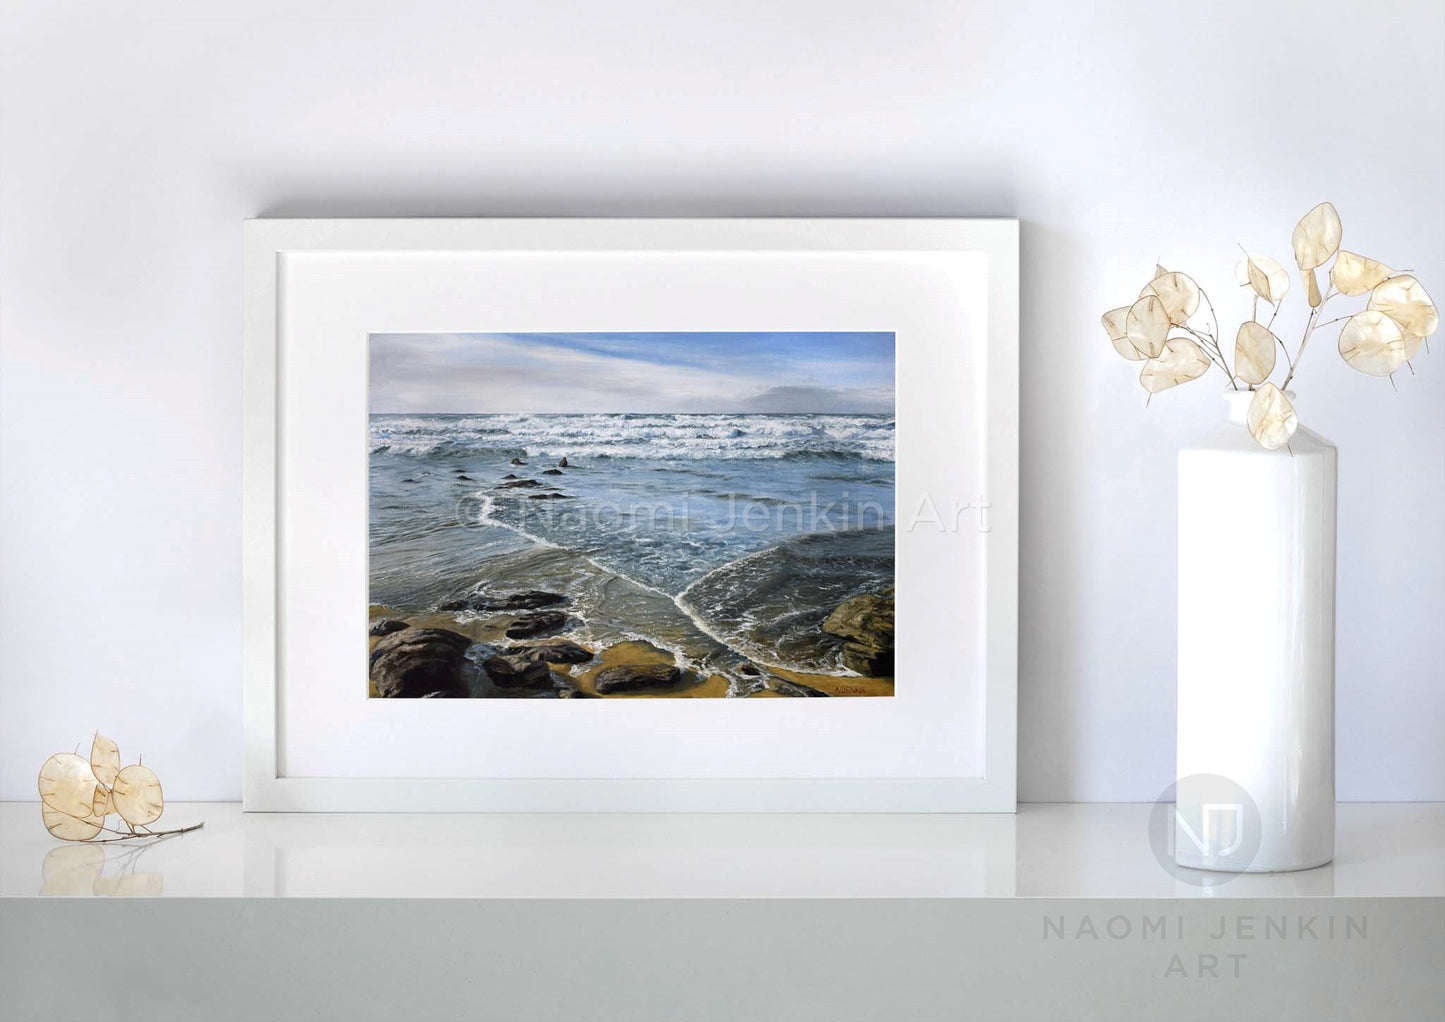 Beach print of Watergate Bay Cornwall by Naomi Jenkin Art. 